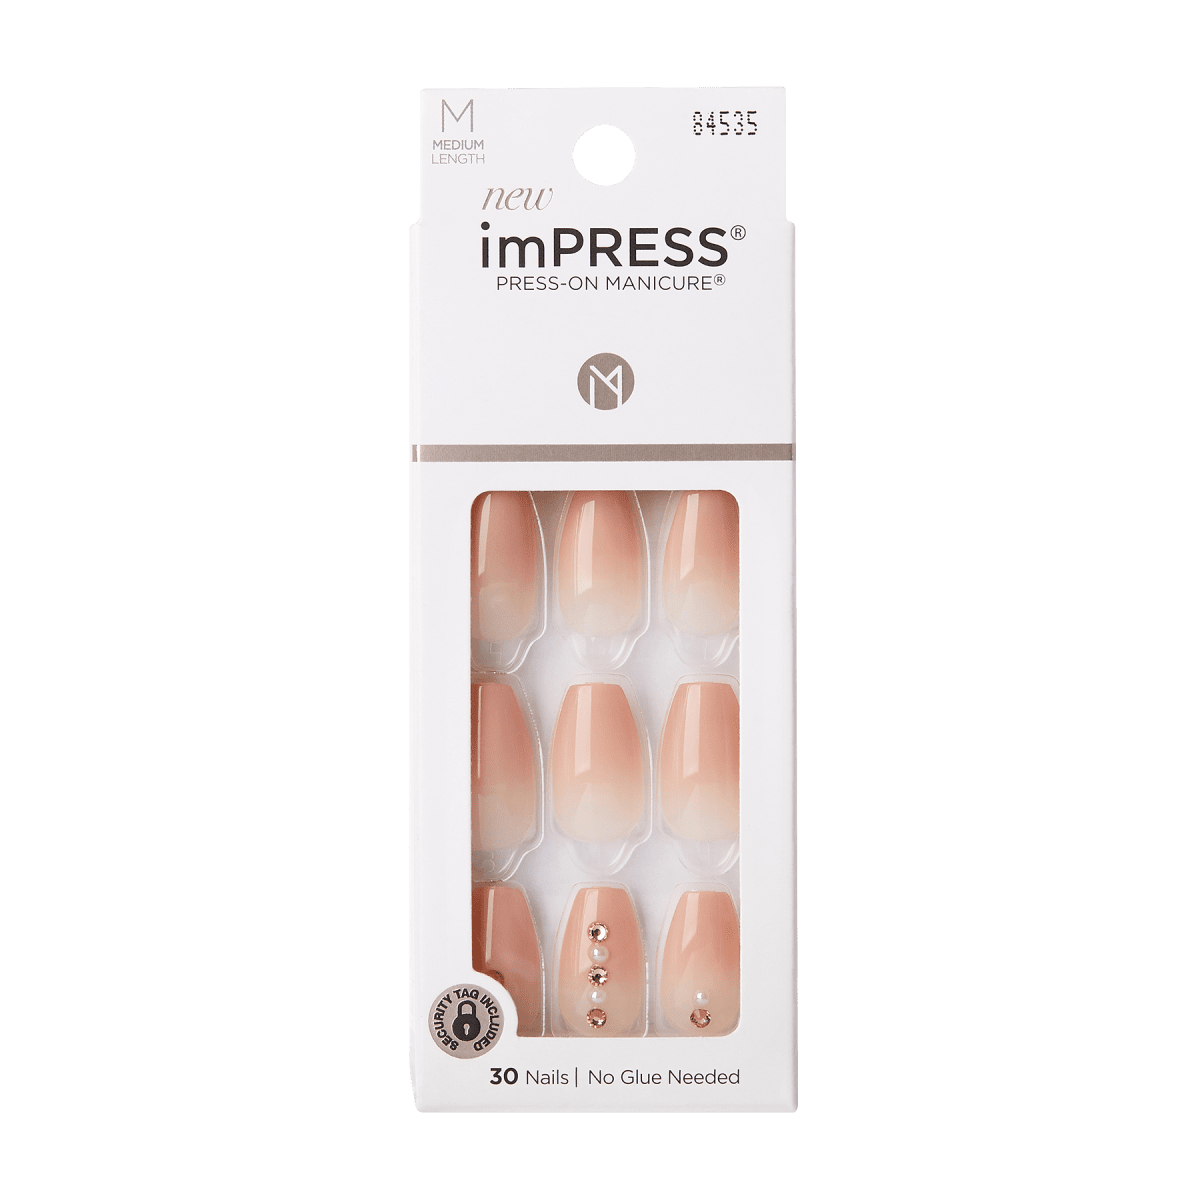 imPRESS Press-On Manicure - The End